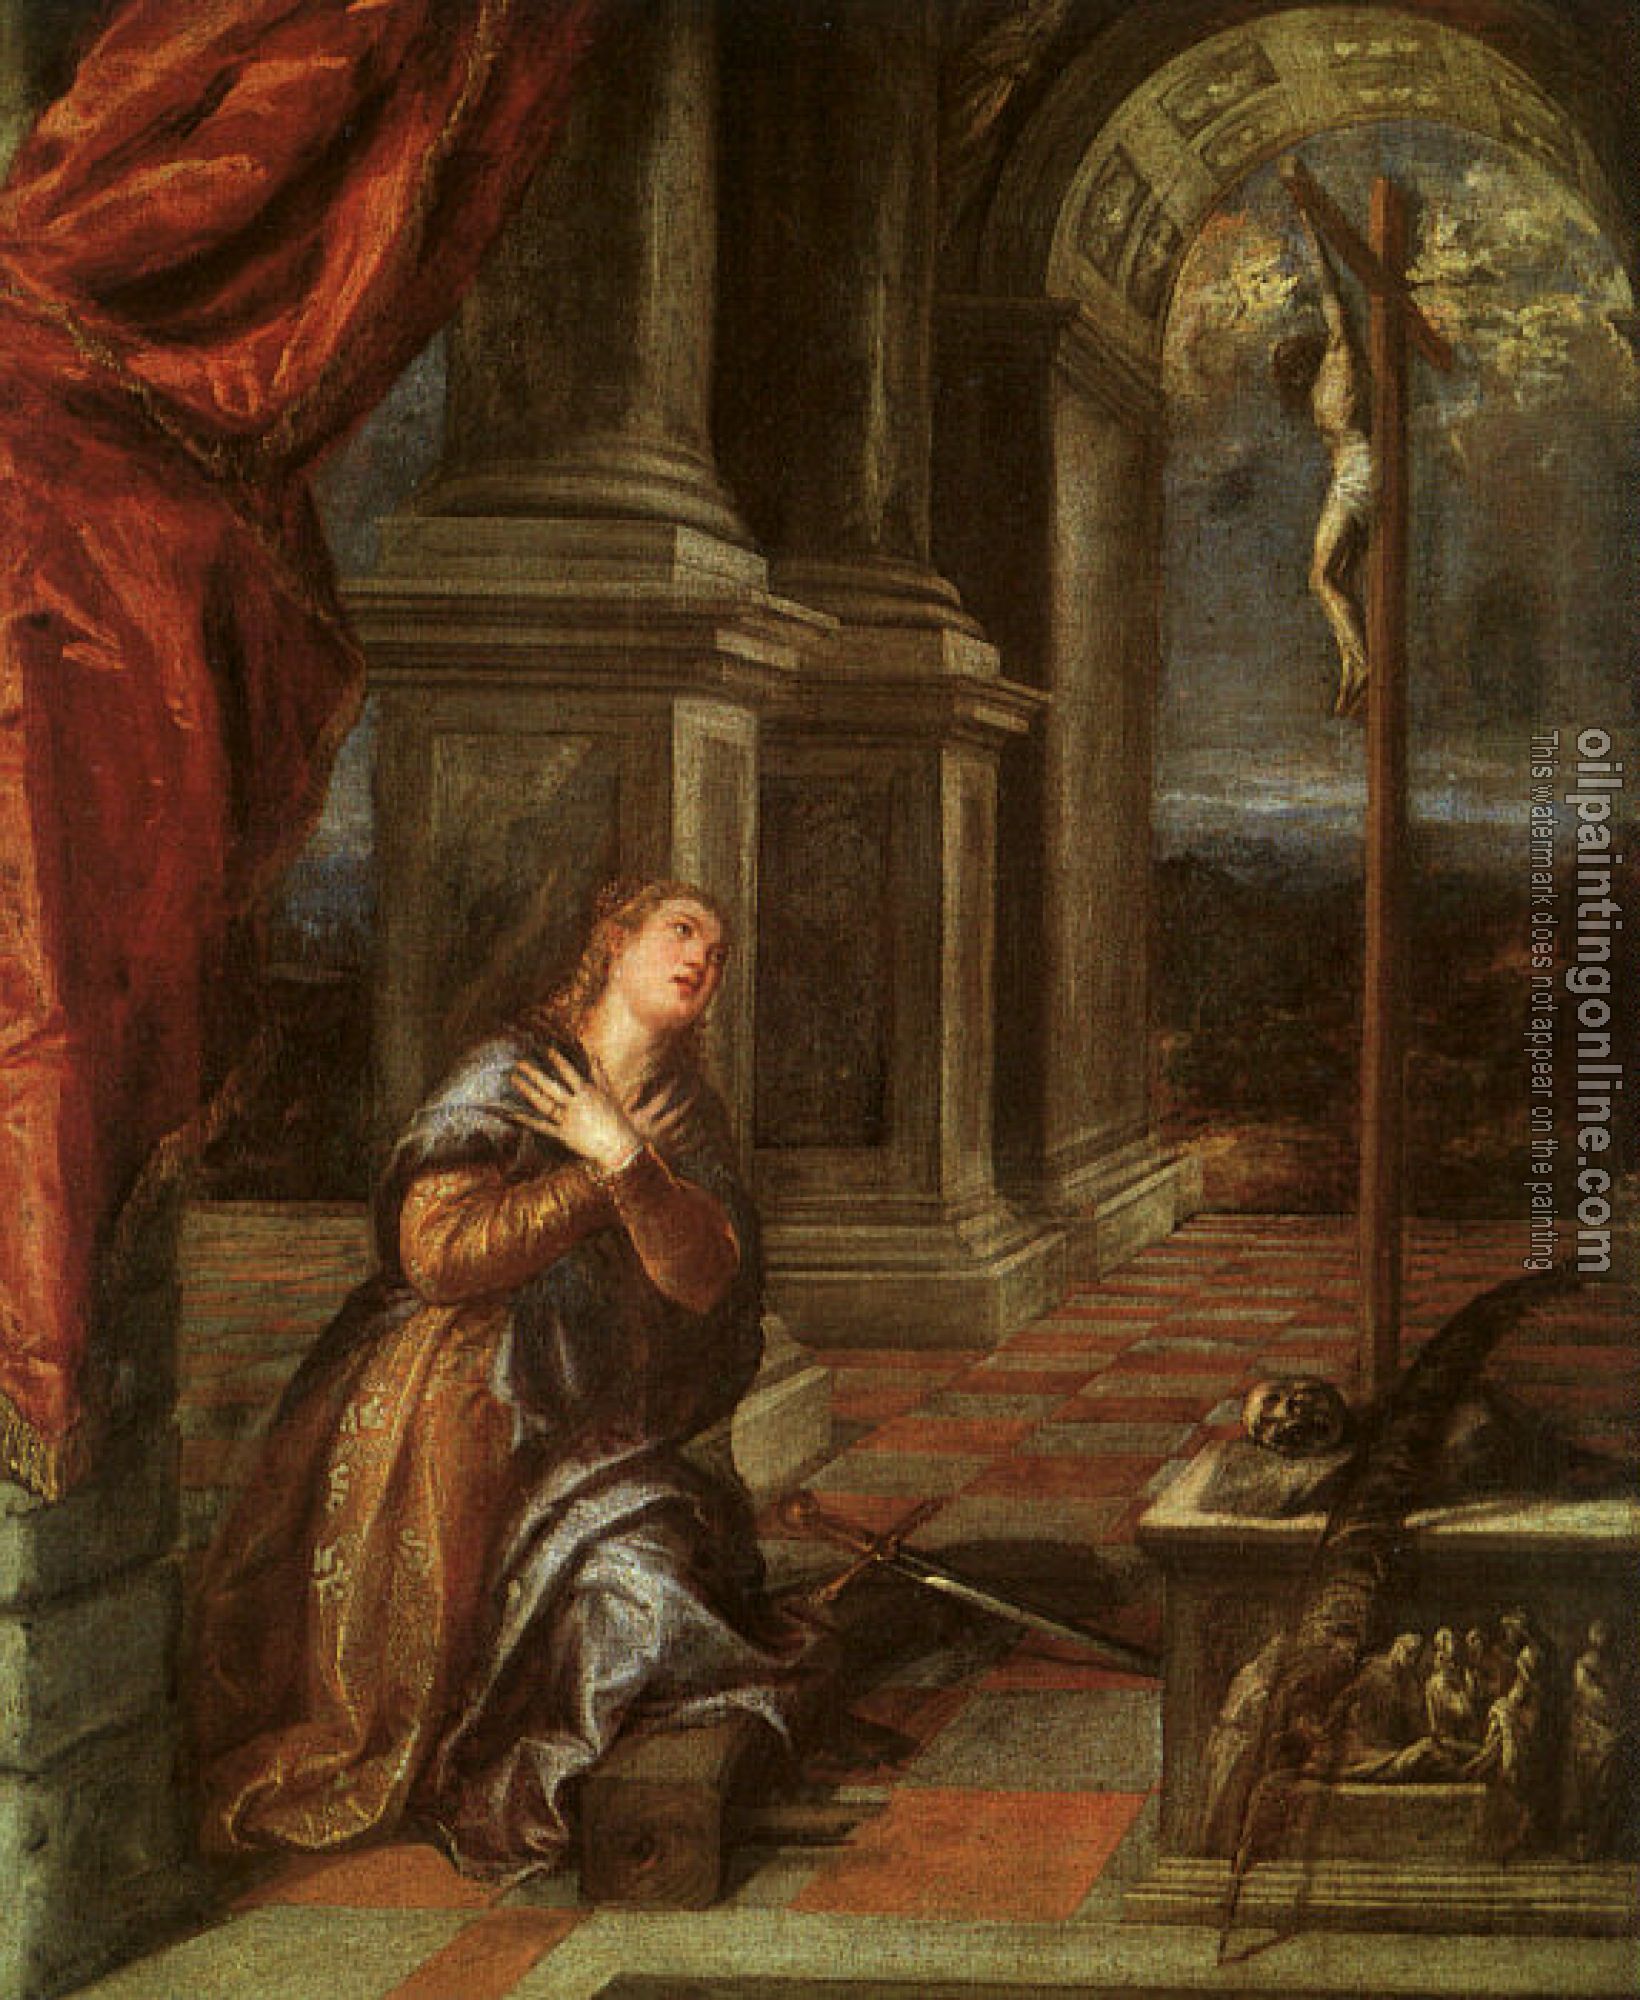 Titian - St. Catherine of Alexandria at Prayer